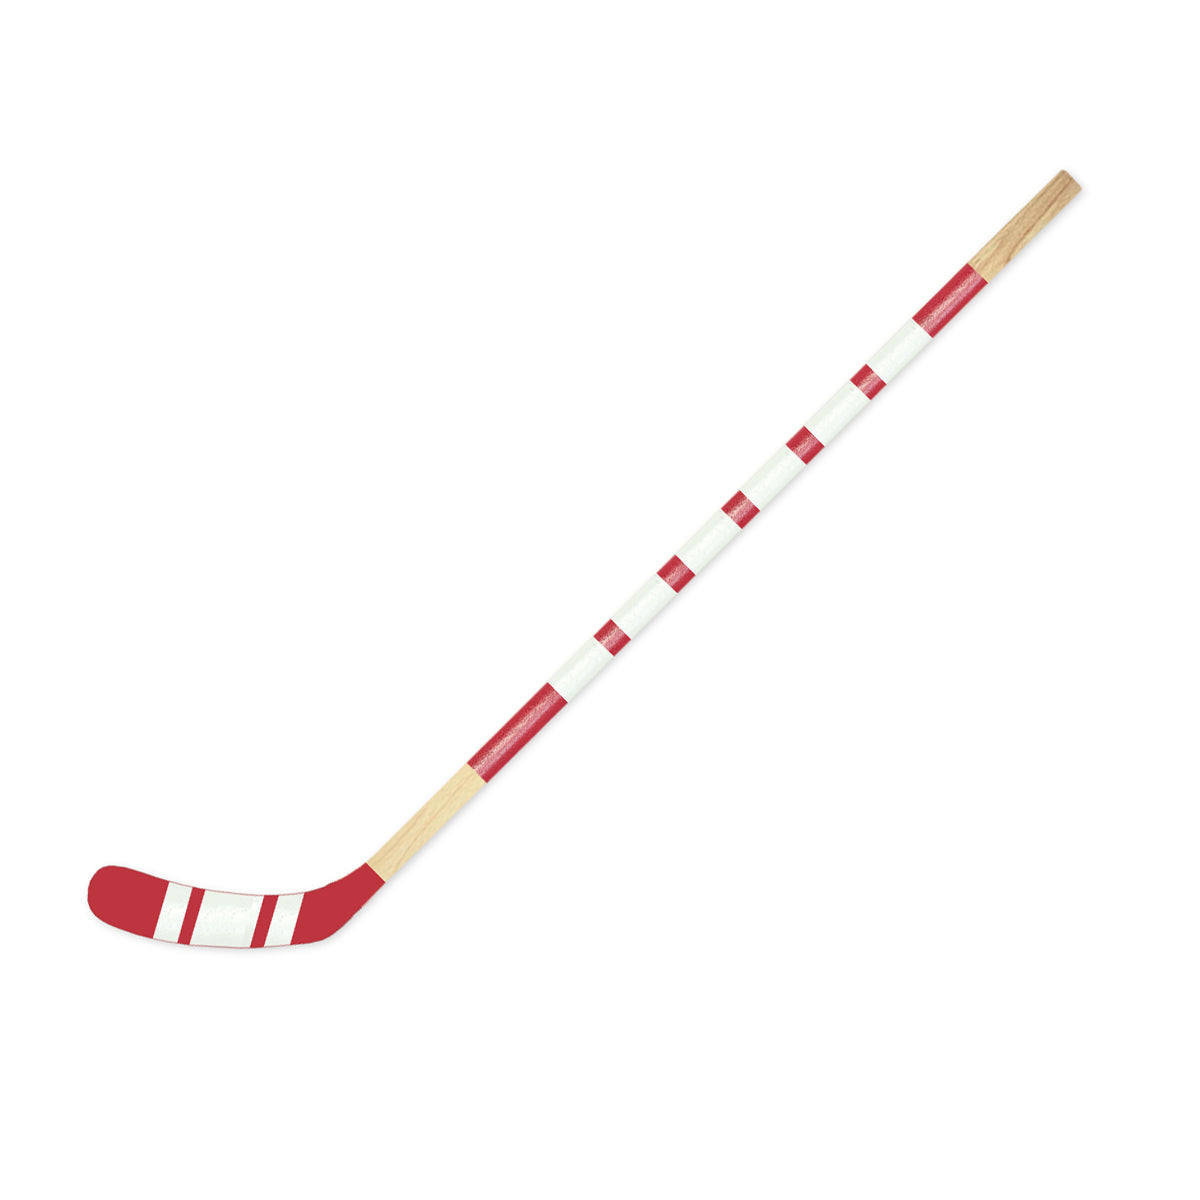 No. 15 Mitchell Hockey Stick